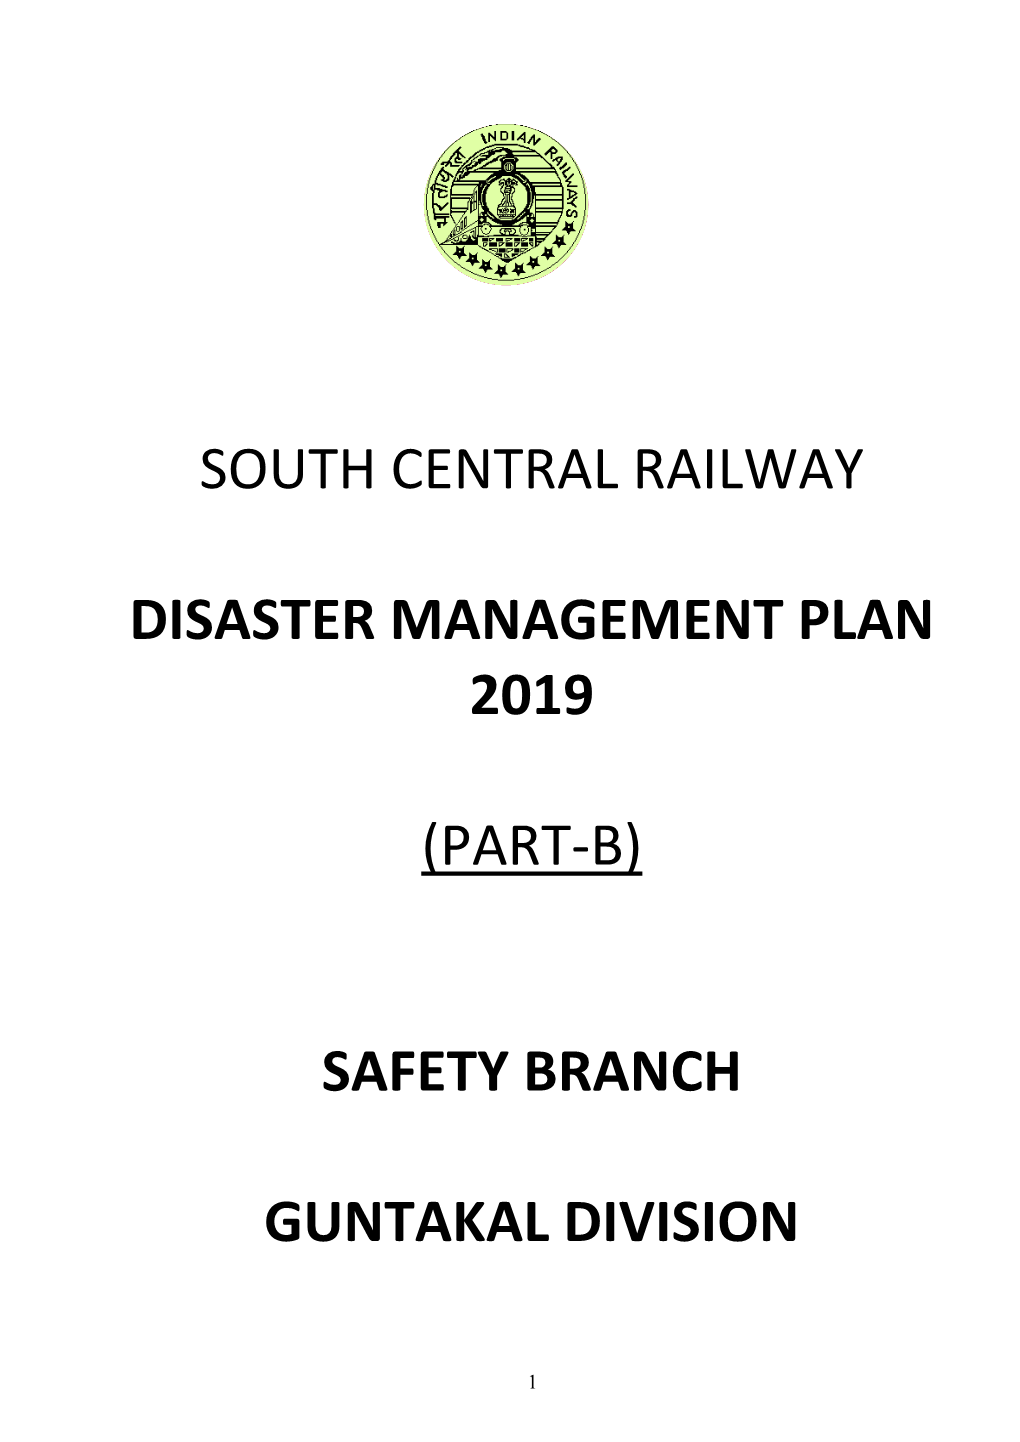 (Part-B) Safety Branch Guntakal Division